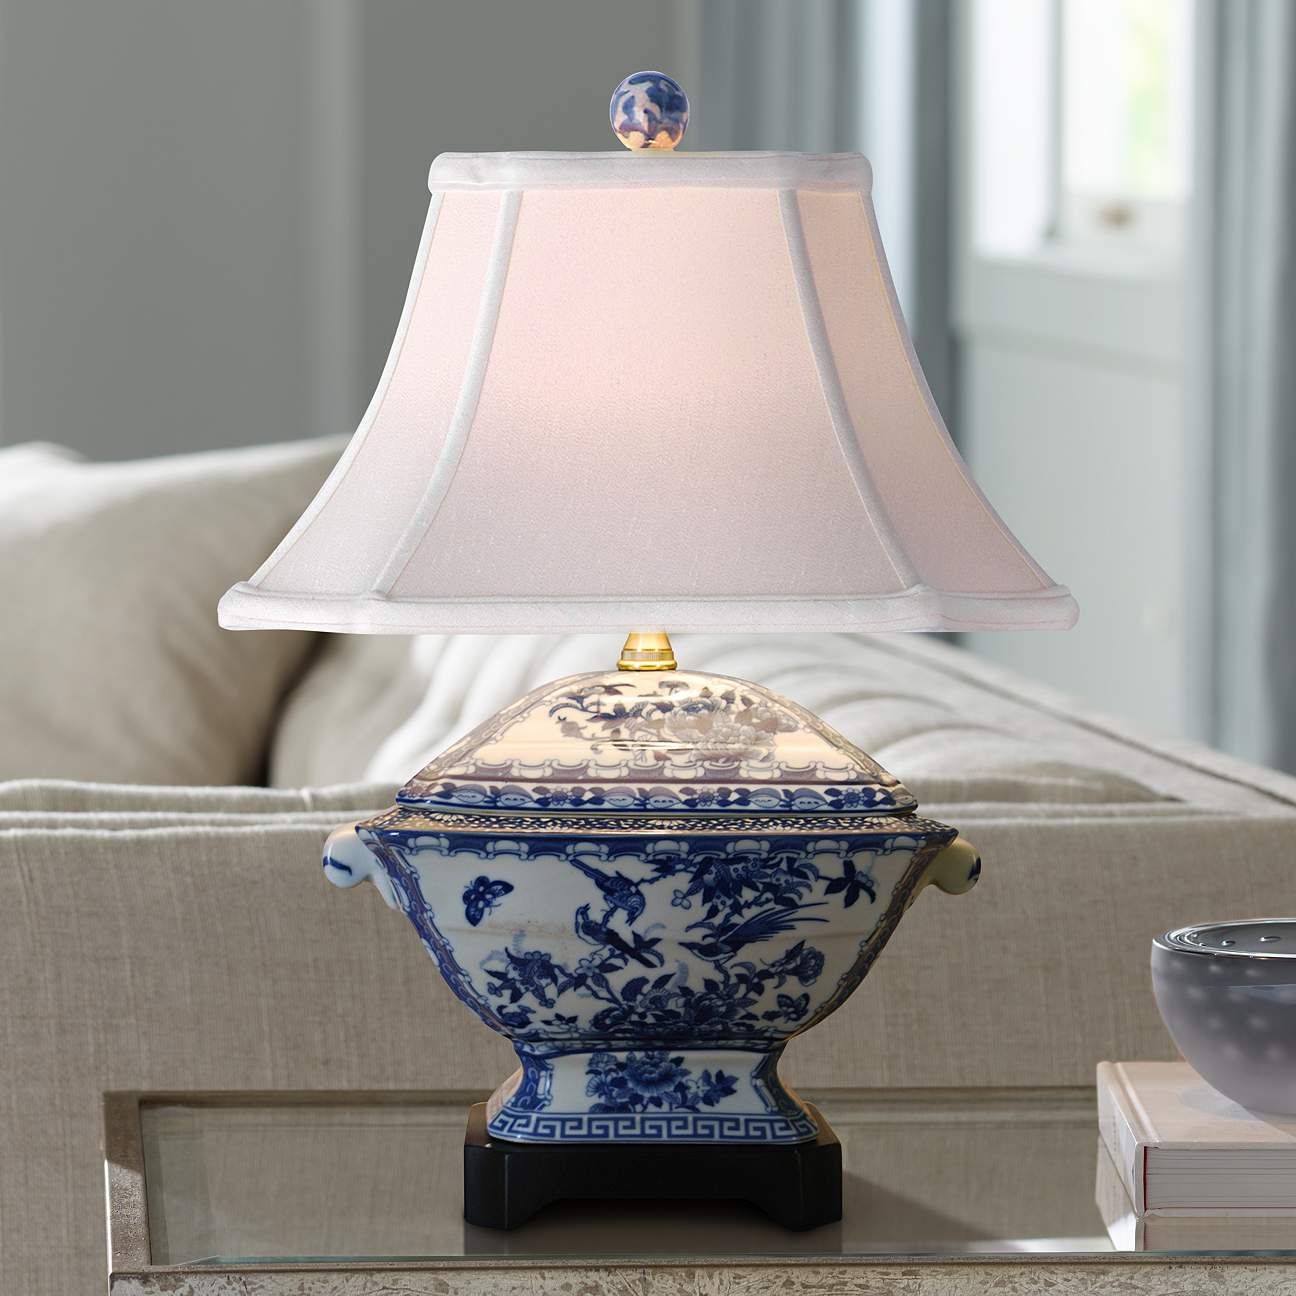 Canton Tureen 19" High Blue and White Porcelain Table Lamp | LampsPlus.com